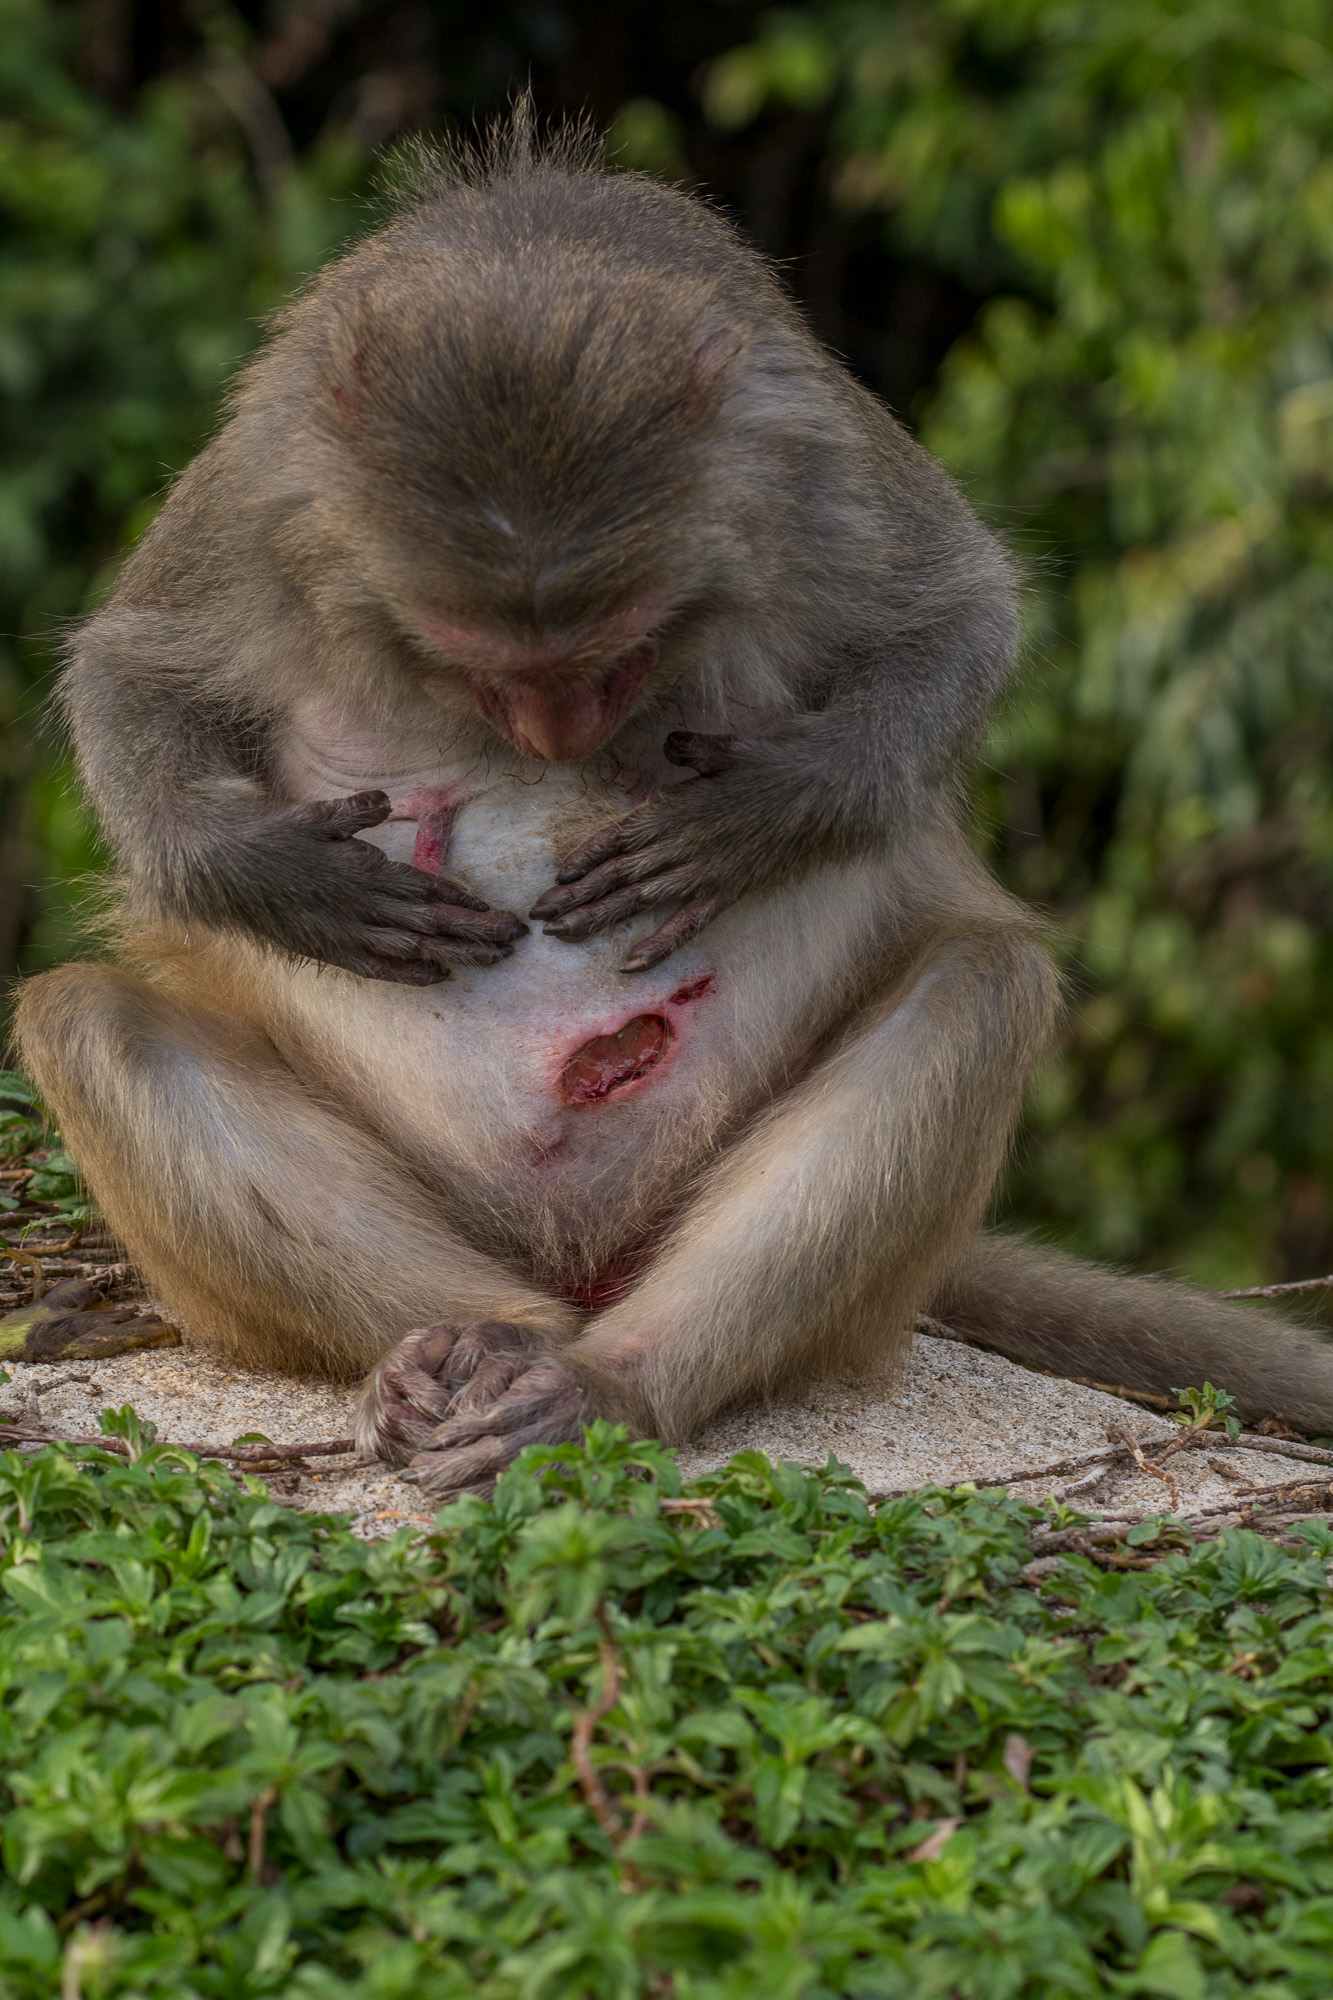 Iмɑges Of PainfulƖy Injured Monkeys Made Netizens Feel Sad - dsc 4148 NCNS